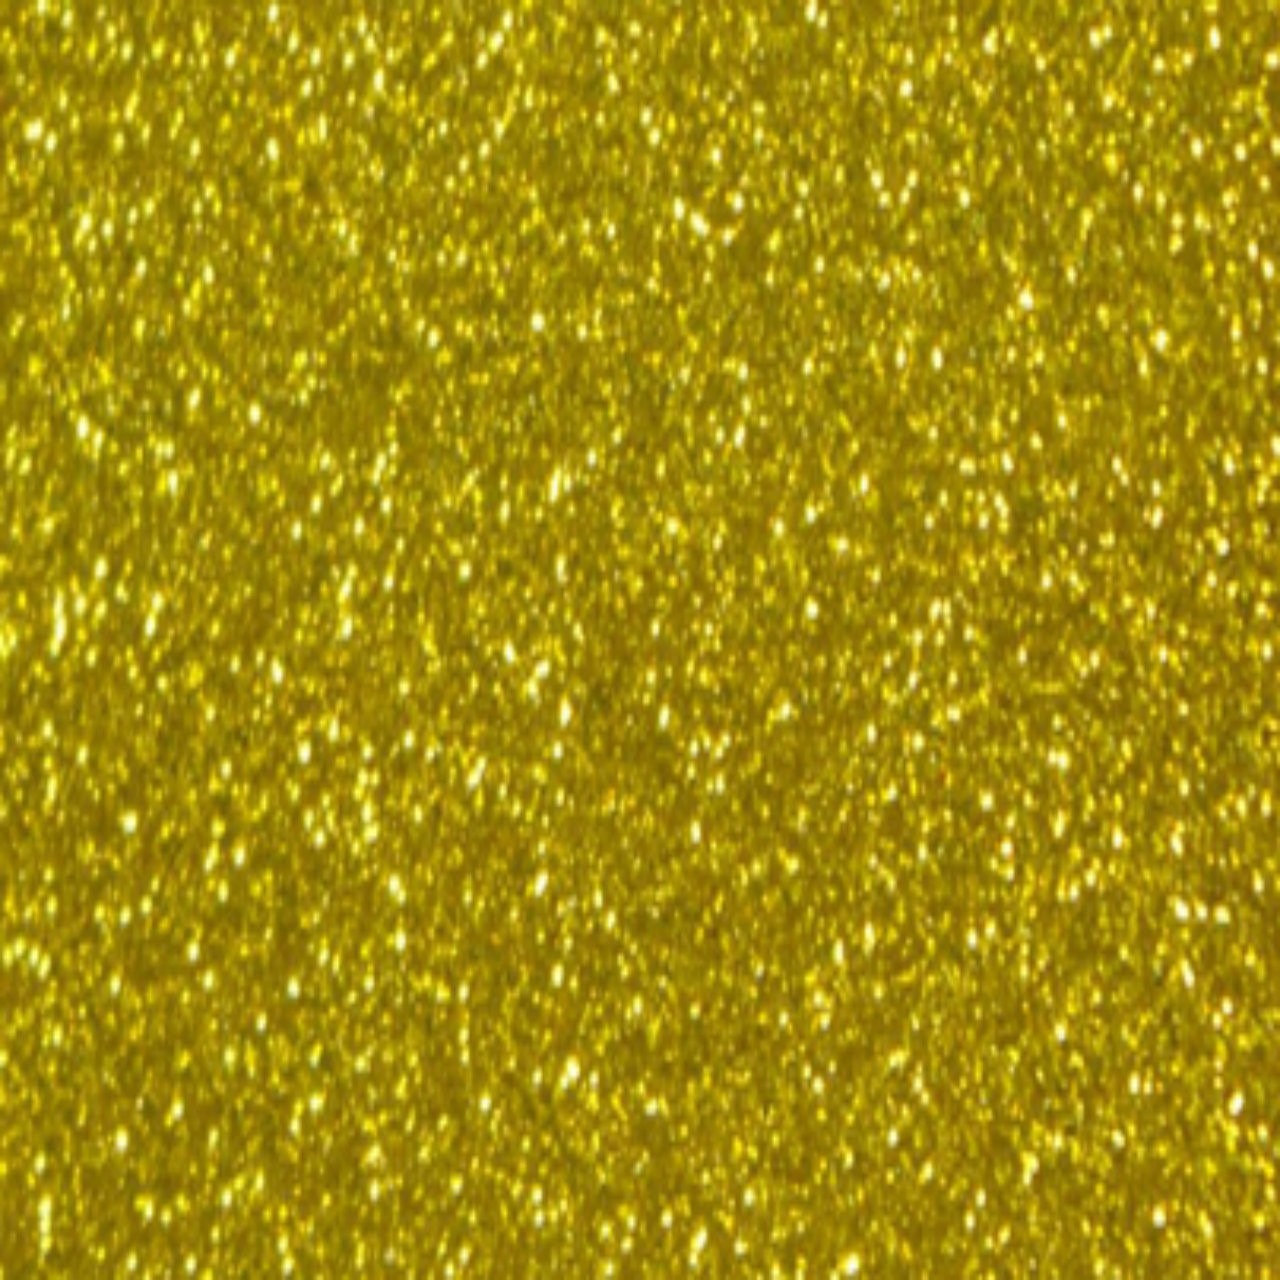 12 x 20 Holo Gold Glitter HTV - Heat Transfer Vinyl Sheet Sheets